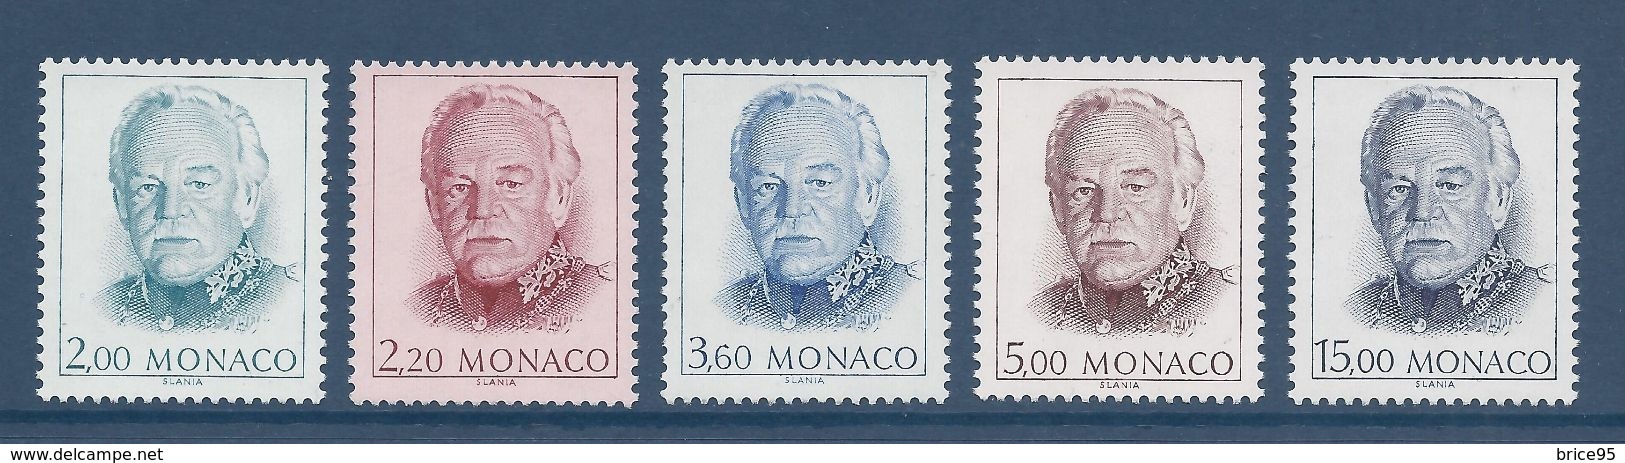 Monaco - YT N° 1671 à 1675 - Neuf Sans Charnière - 1989 - Neufs